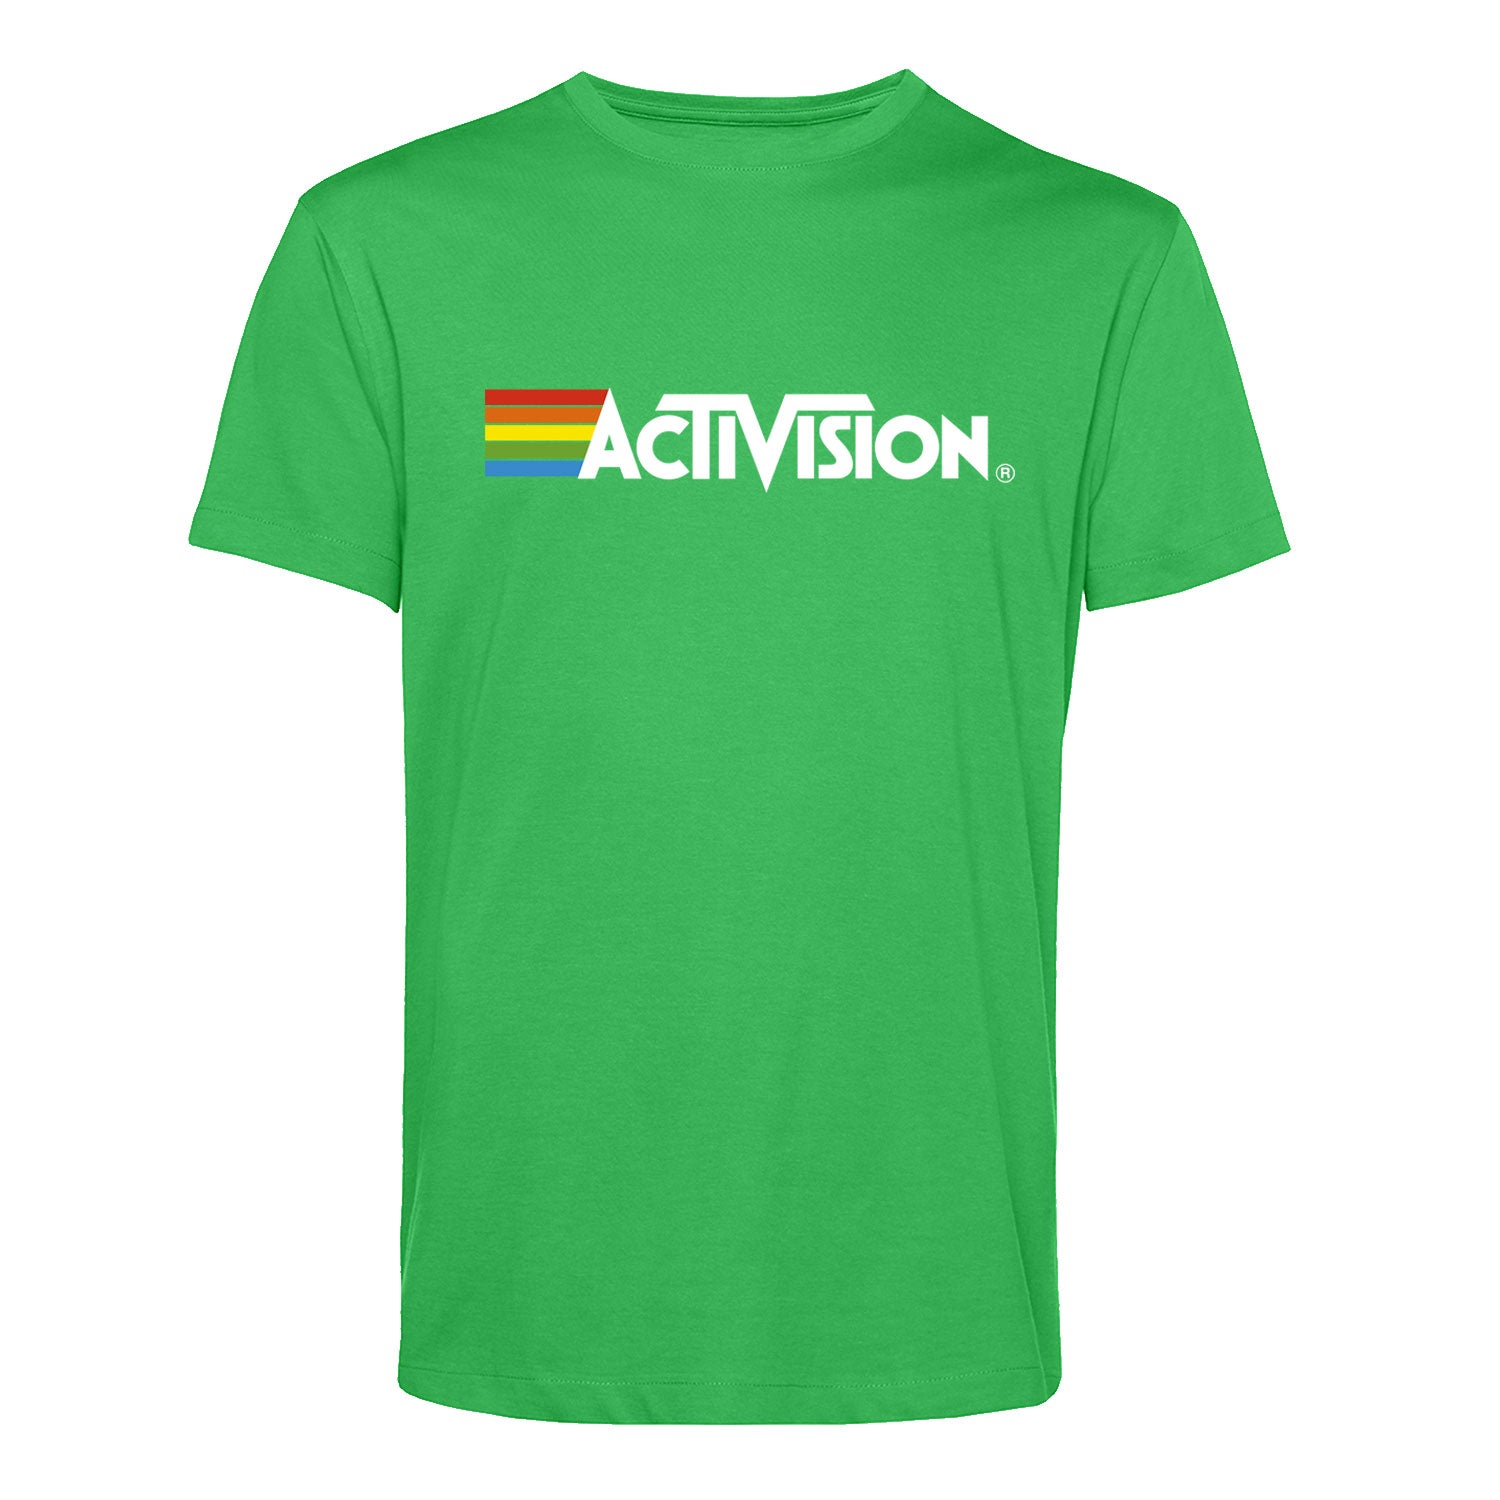 Activision Men's T-Shirt, Green Unisex Style